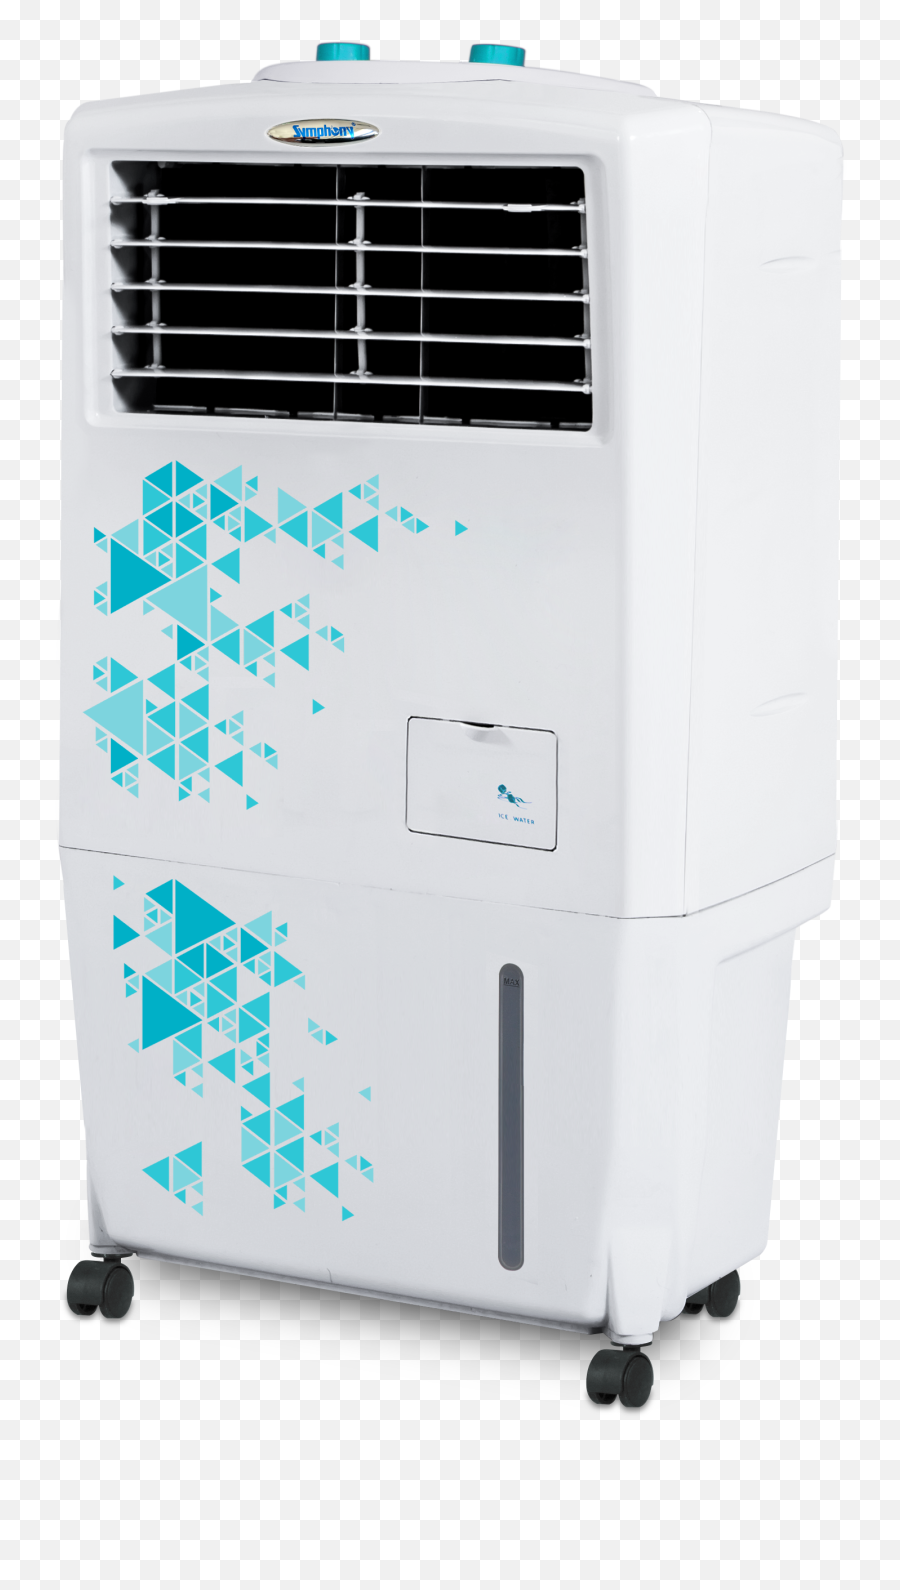 Air Cooler Png Picture - Symphony Cooler Ninja Price,Cooler Png